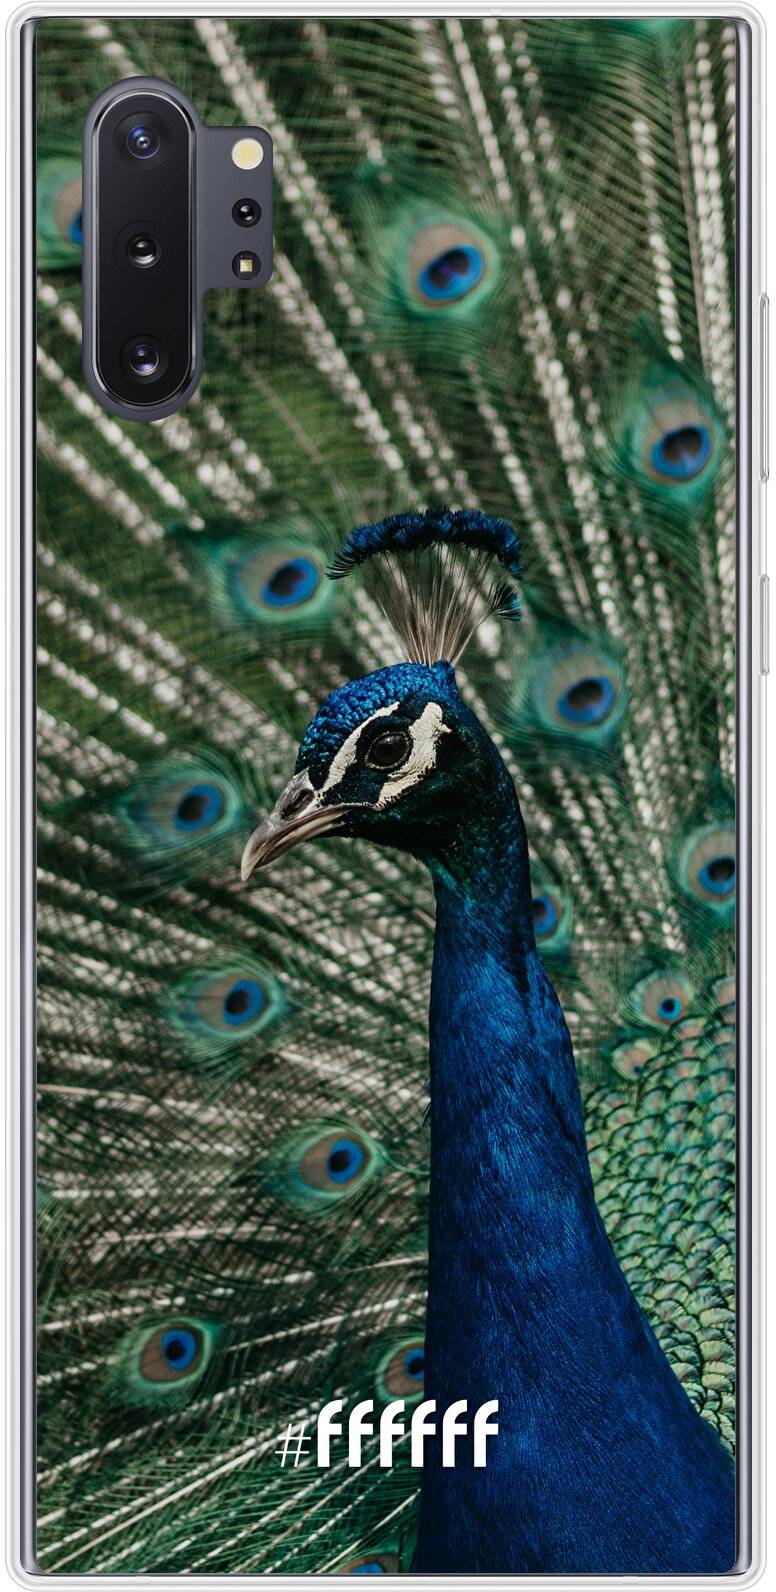 Peacock Galaxy Note 10 Plus